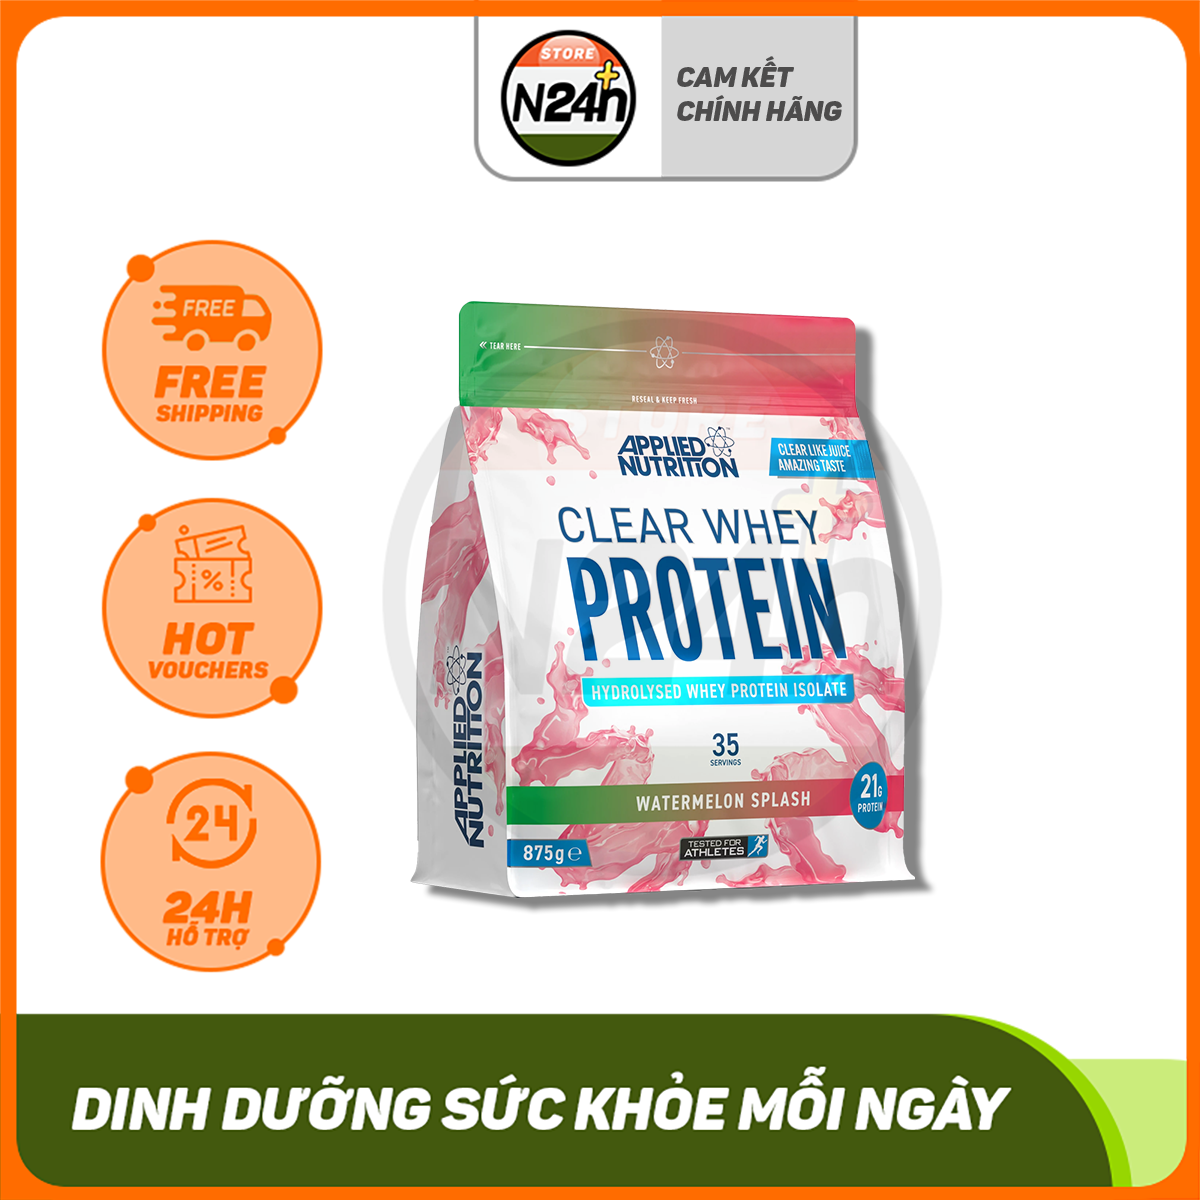 Clear Whey Protein Hyrolyzed Whey Applied Nutrition Cao Cấp Tăng Cơ Nhanh